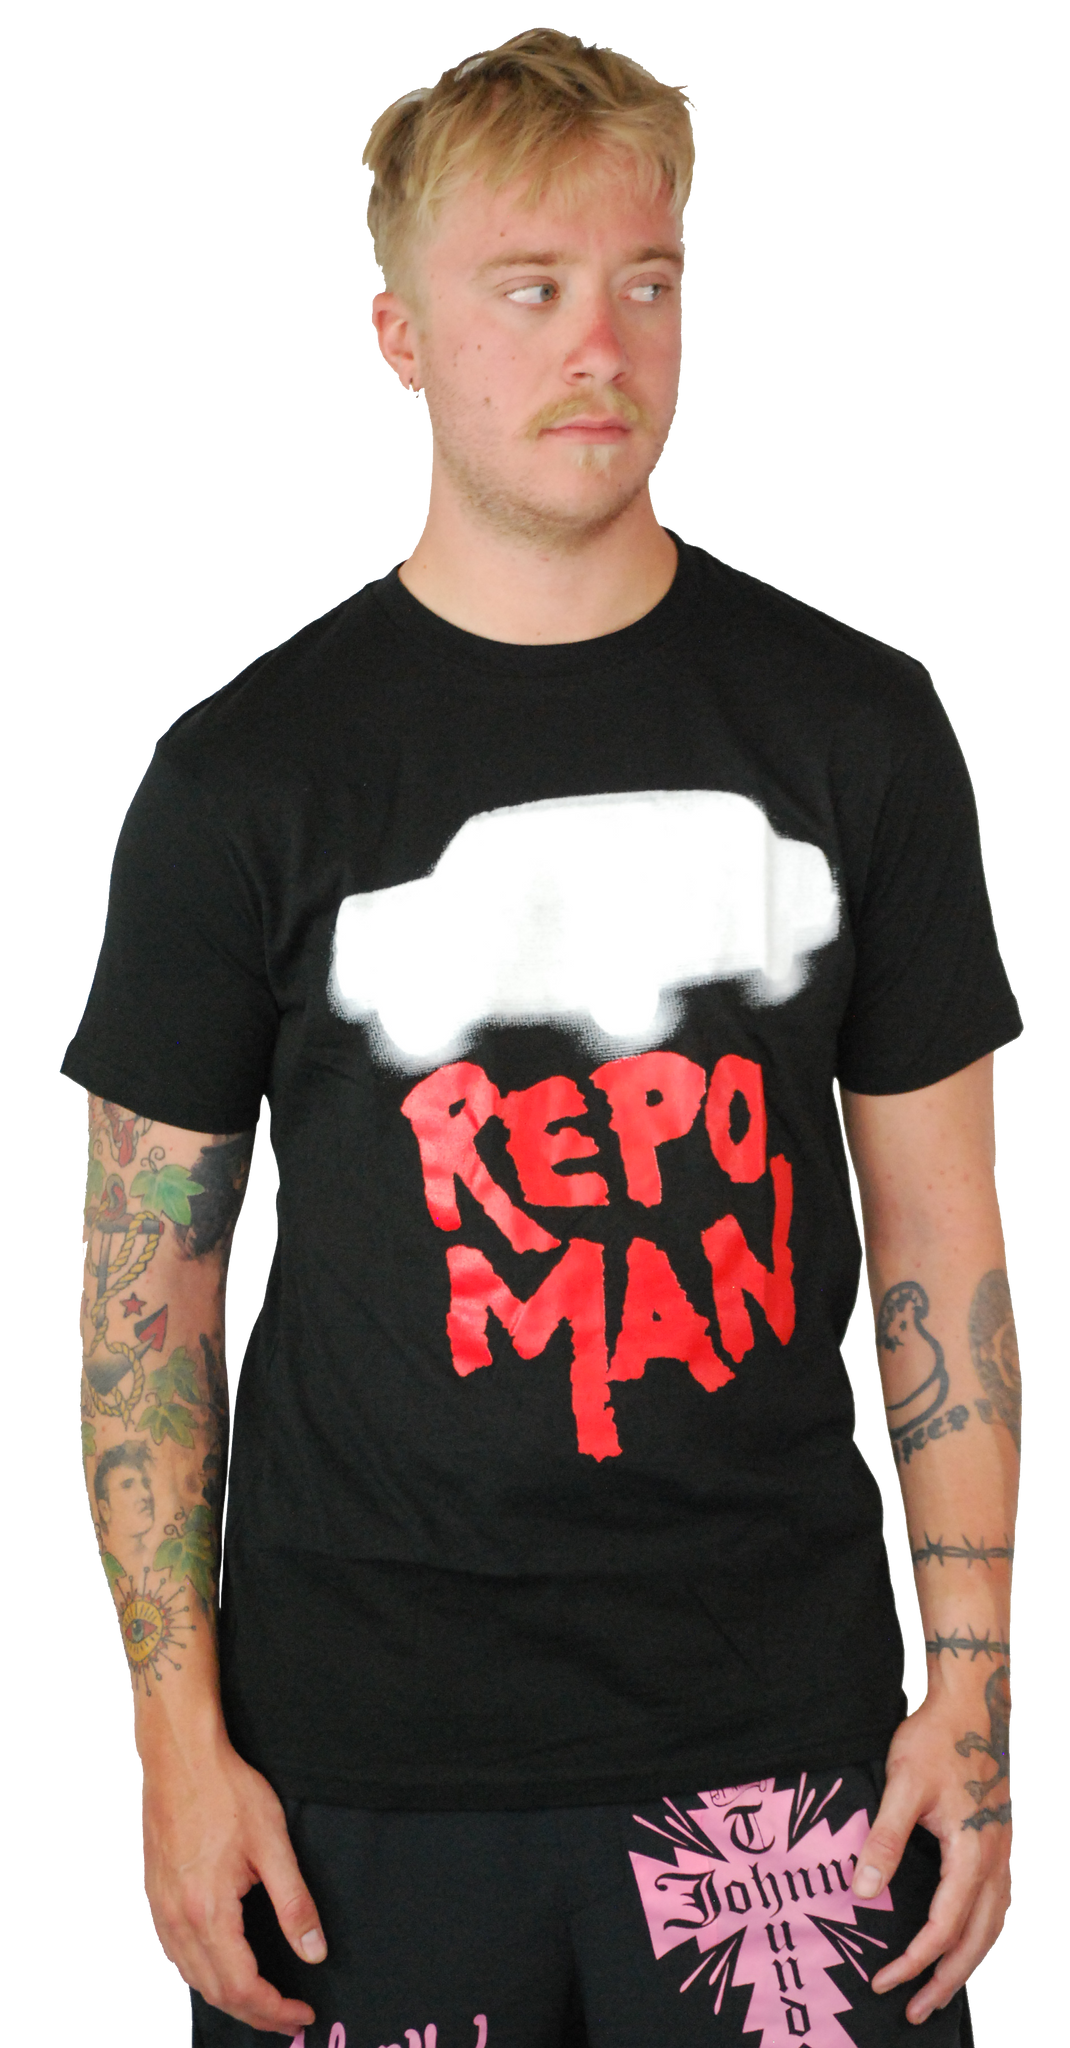 REPO MAN: ANNIVERSARY CAR & LOGO GLOW IN THE DARK T-SHIRT